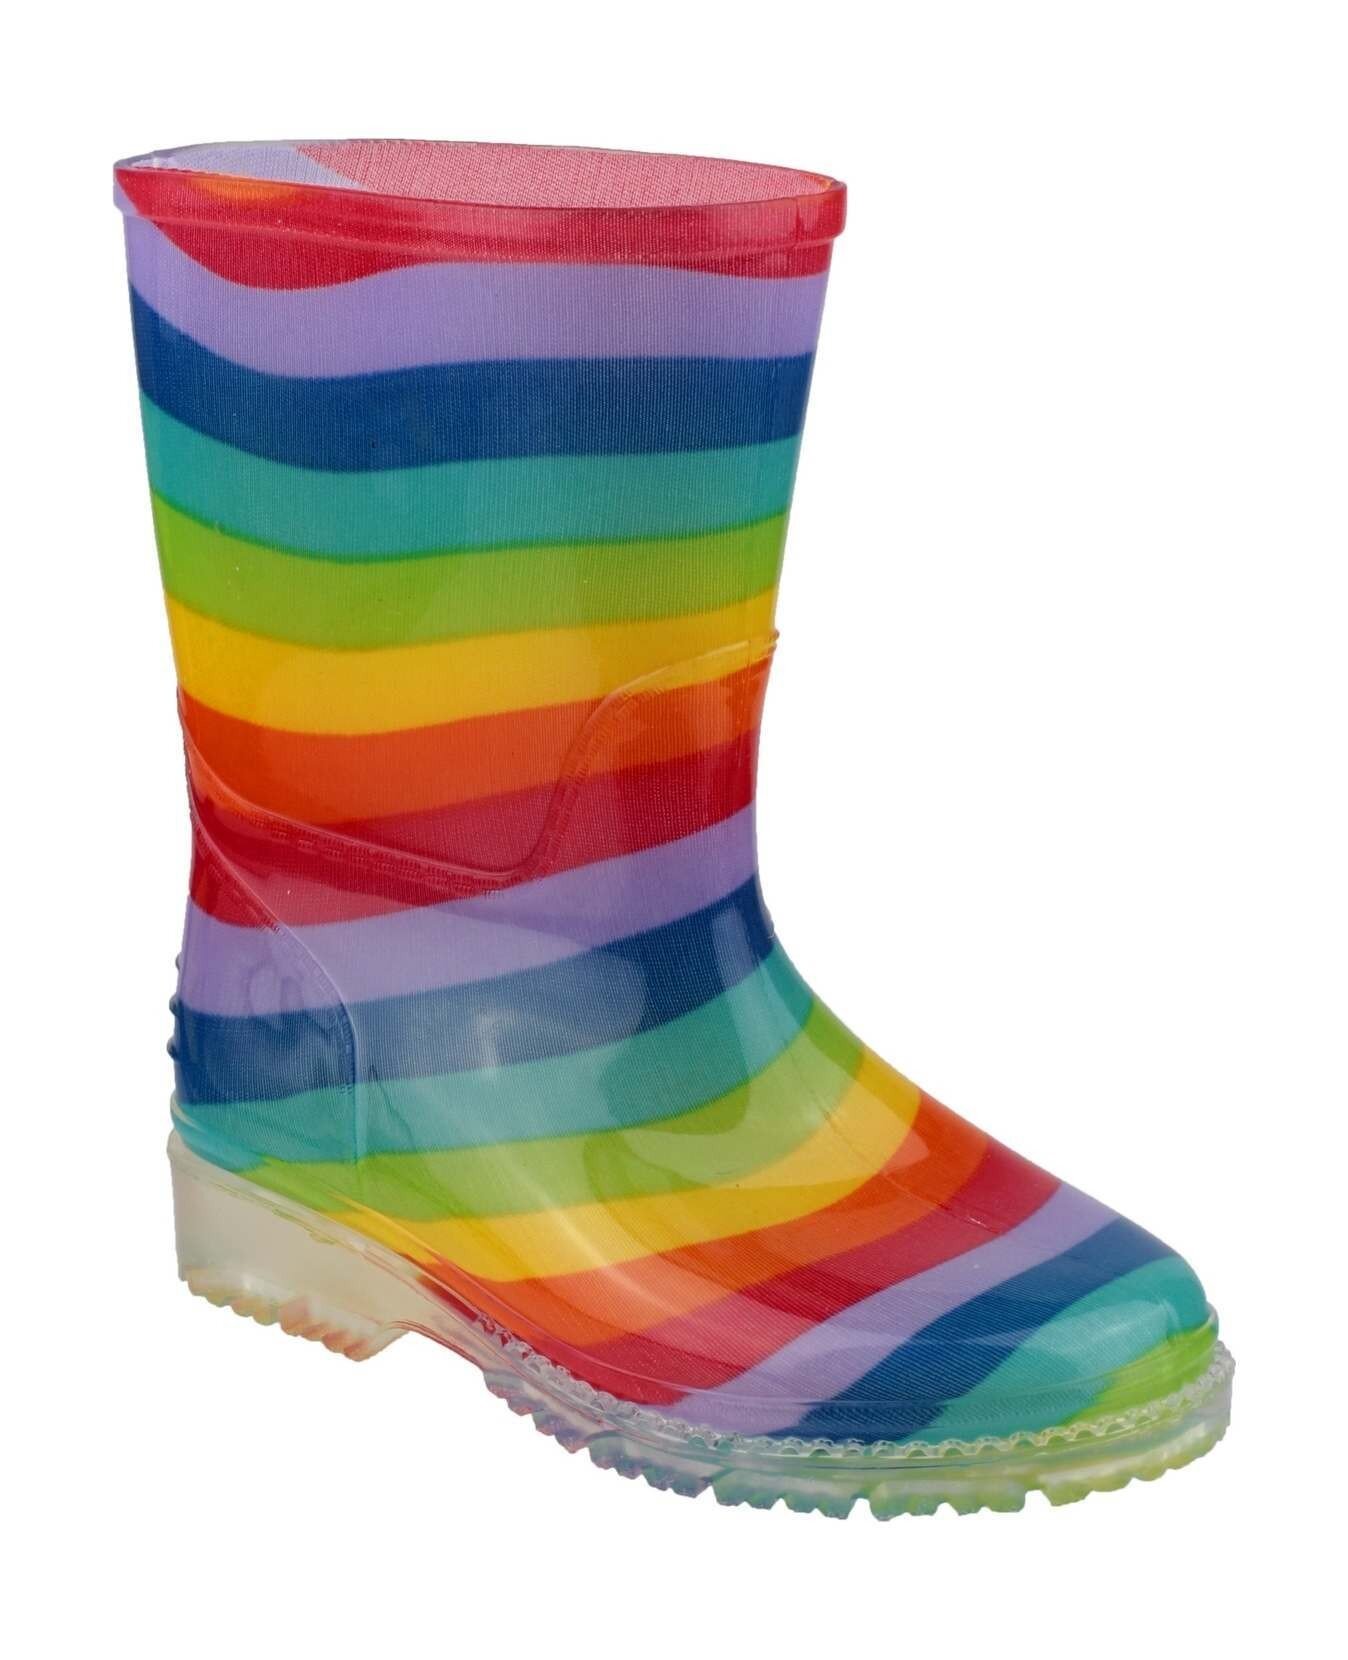 Cotswold PVC Jnr Wellington Boots in Rainbow.jpg